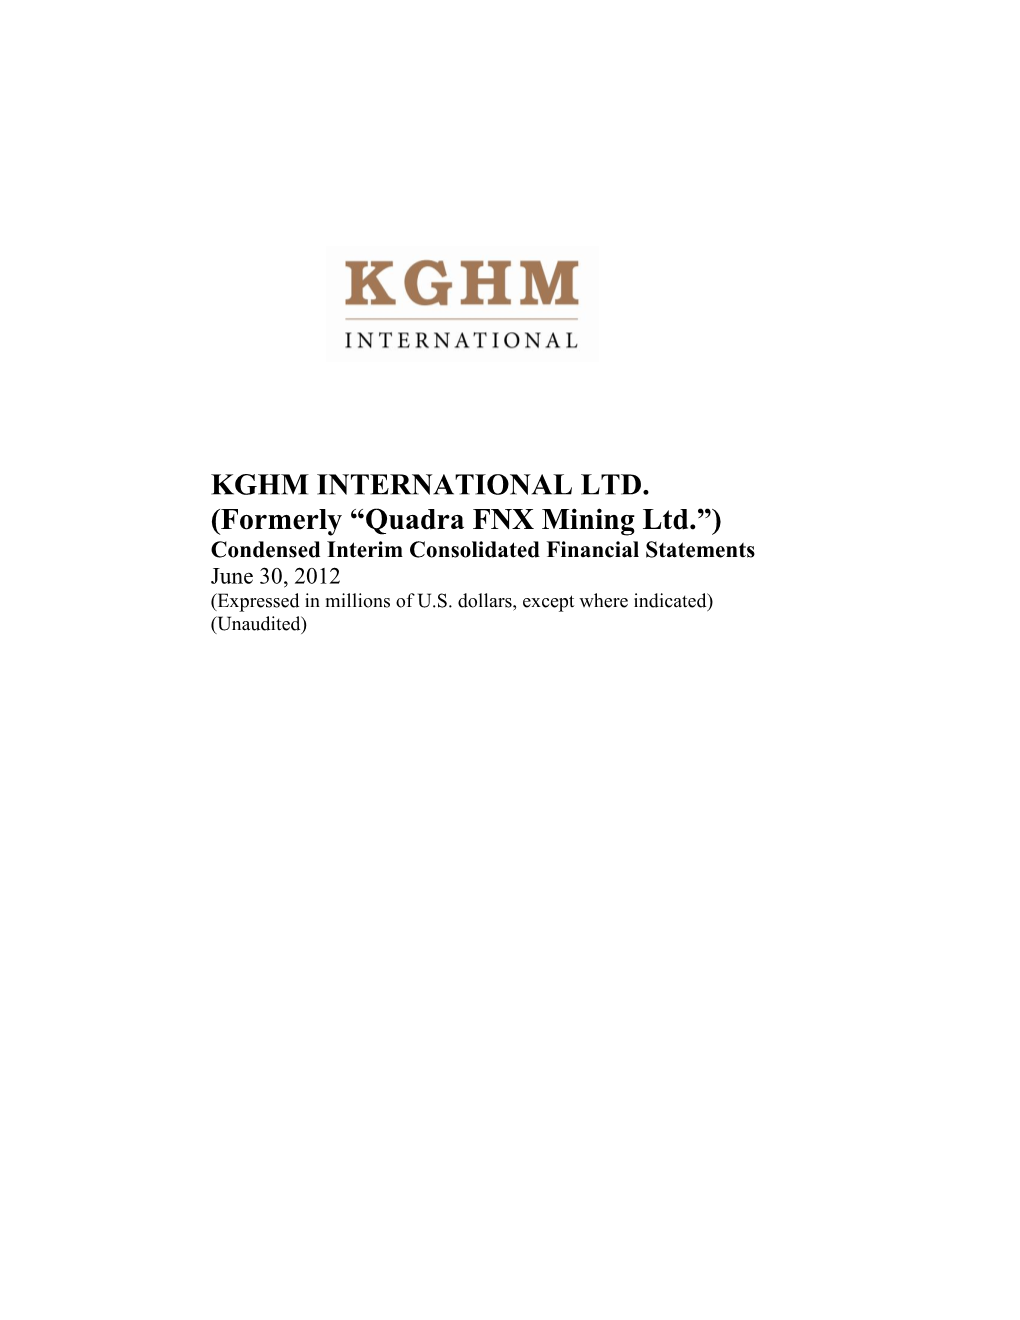 KGHM INTERNATIONAL LTD. (Formerly “Quadra FNX Mining Ltd.”) Condensed Interim Consolidated Financial Statements June 30, 2012 (Expressed in Millions of U.S